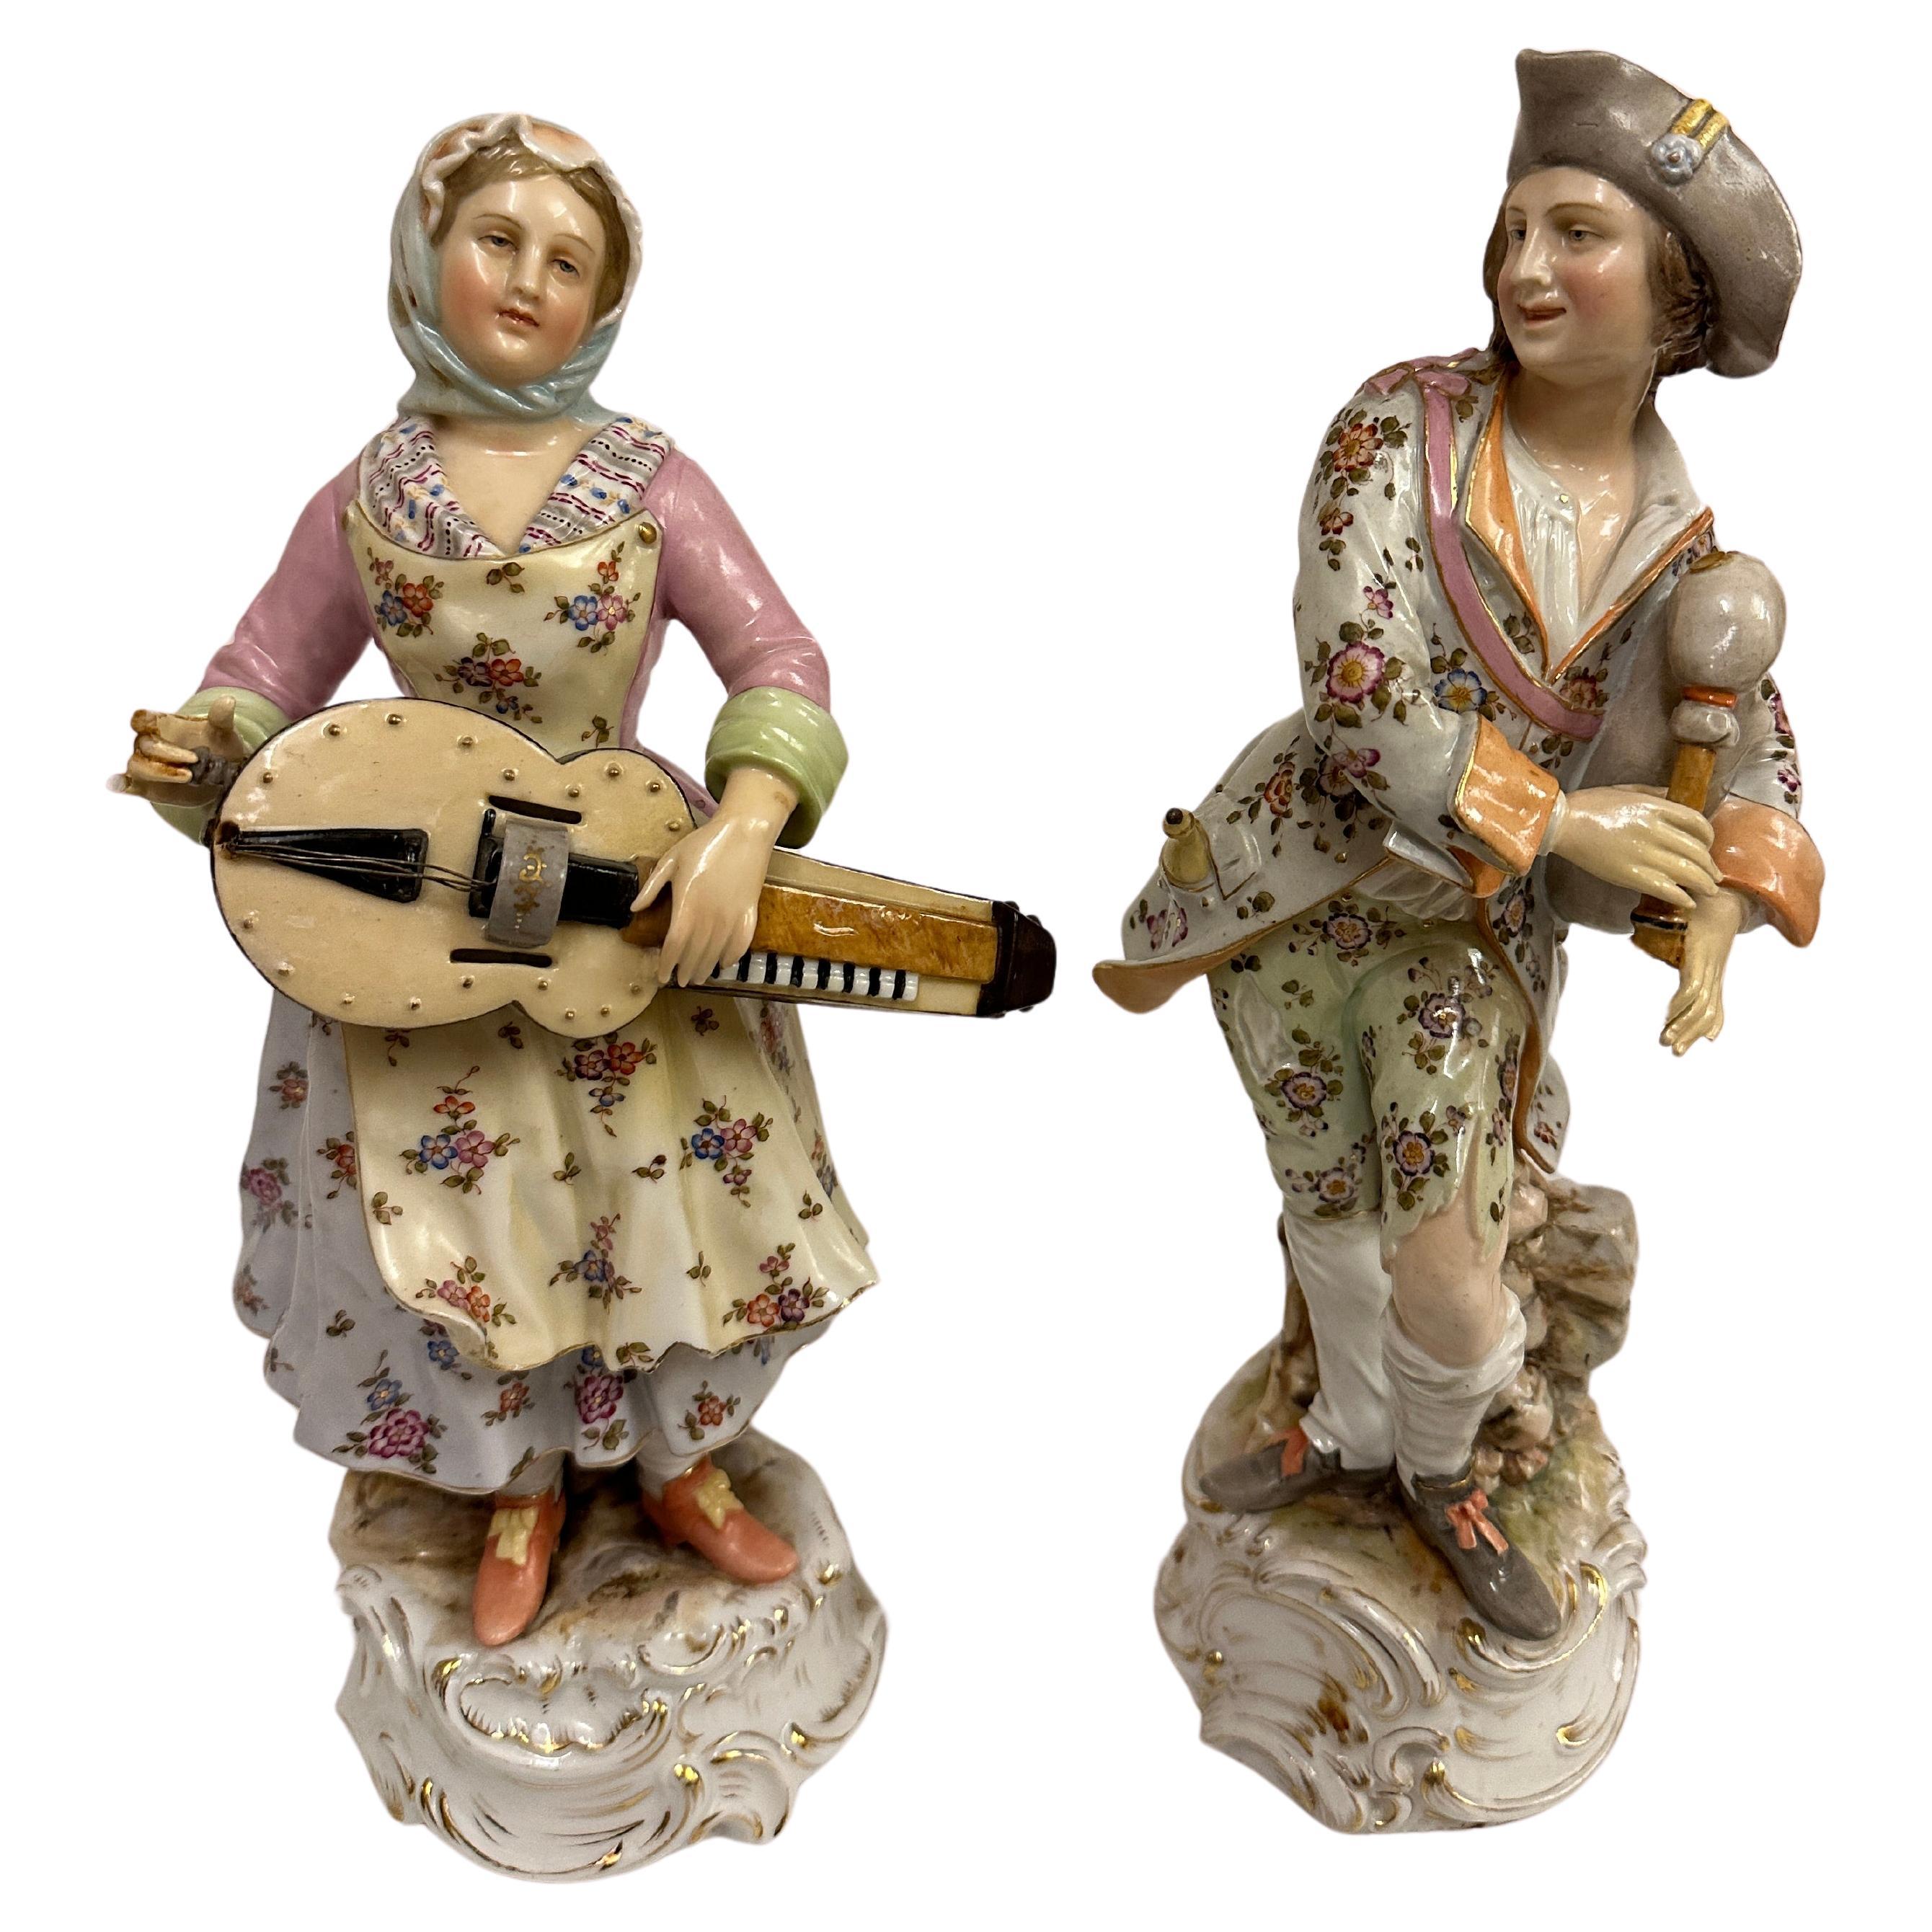 Pair of Antique German Porcelain Musical Figures, circa 1880